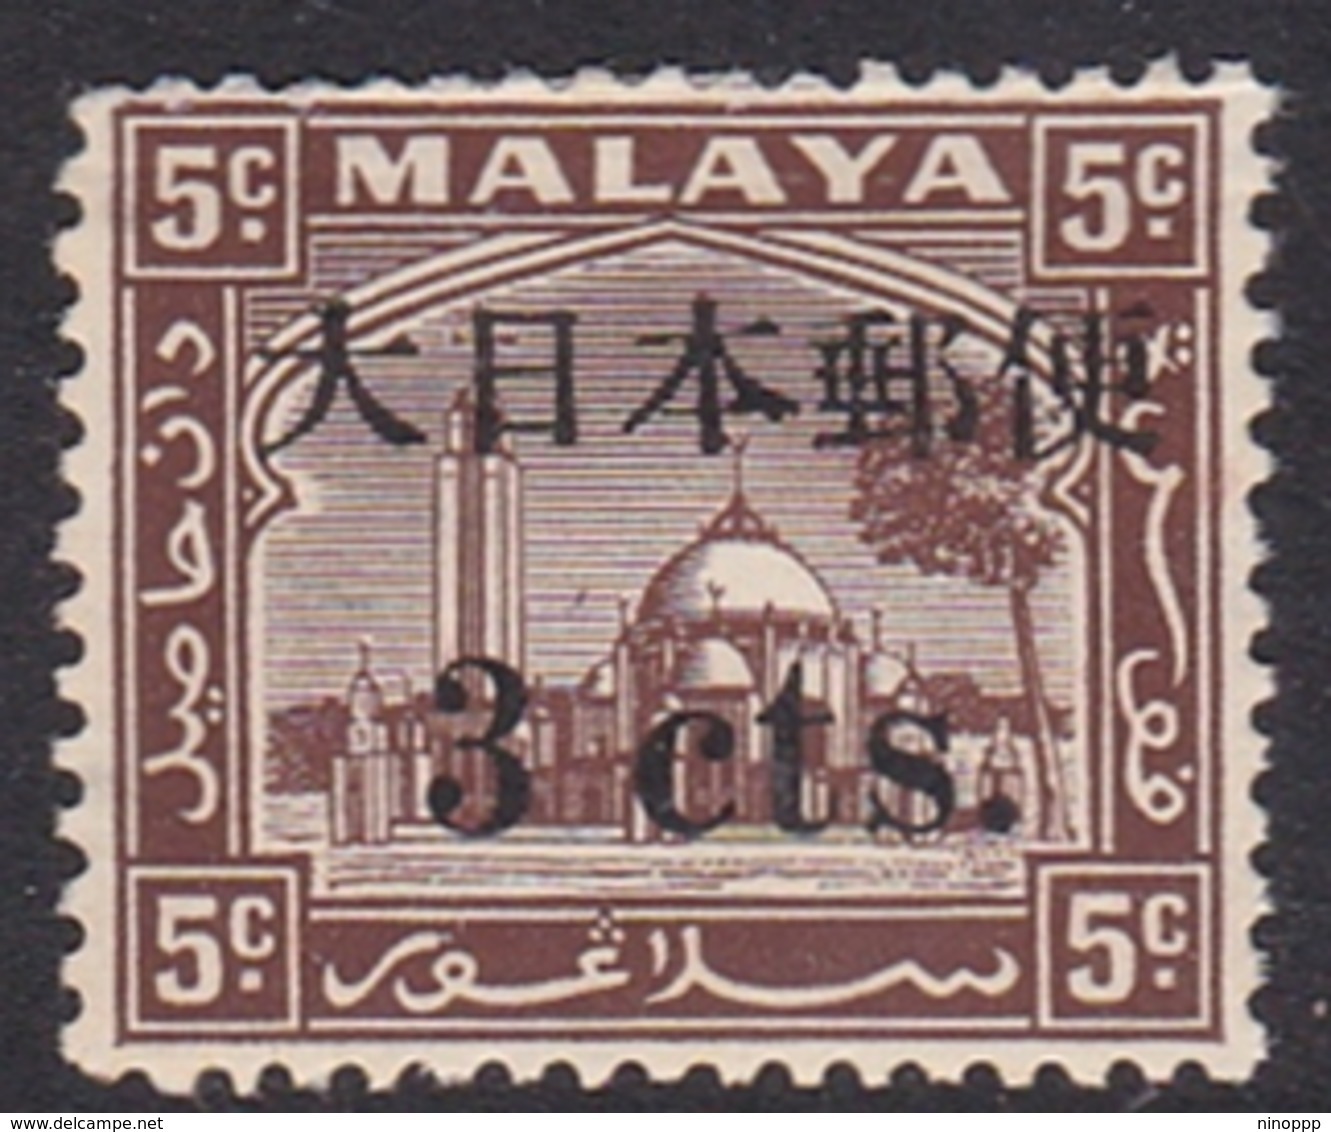 Malaya-Selangor Japan Occupation N 31 1943 3c On 5c Chocolate, Mint Never Hinged - Japanisch Besetzung